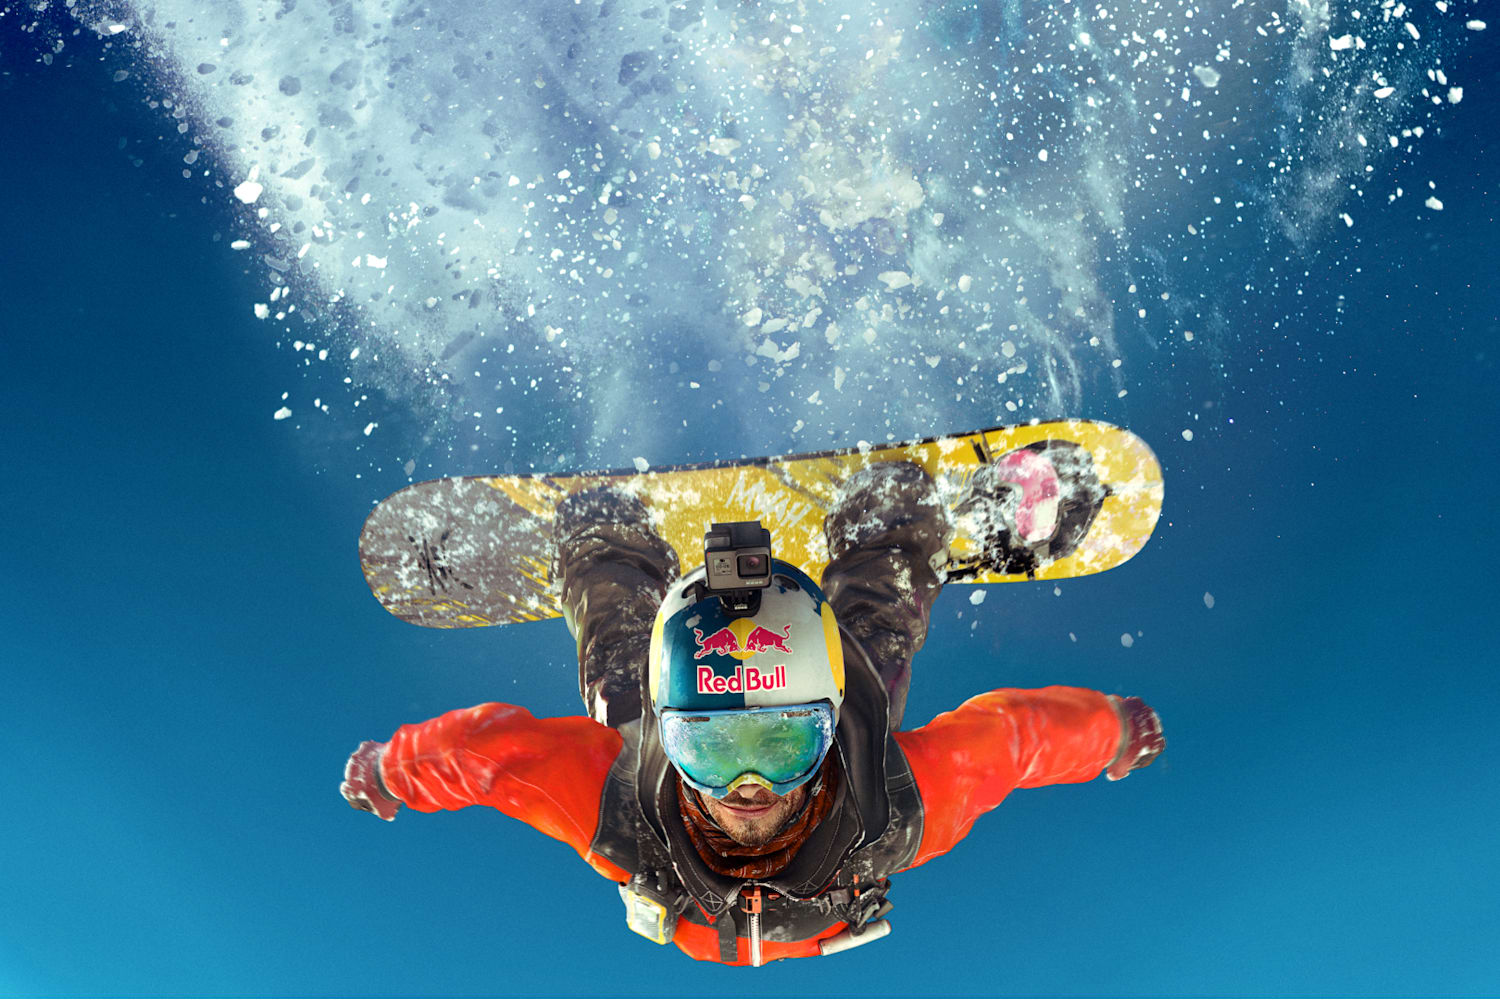 Steep Snowboarding Game Art